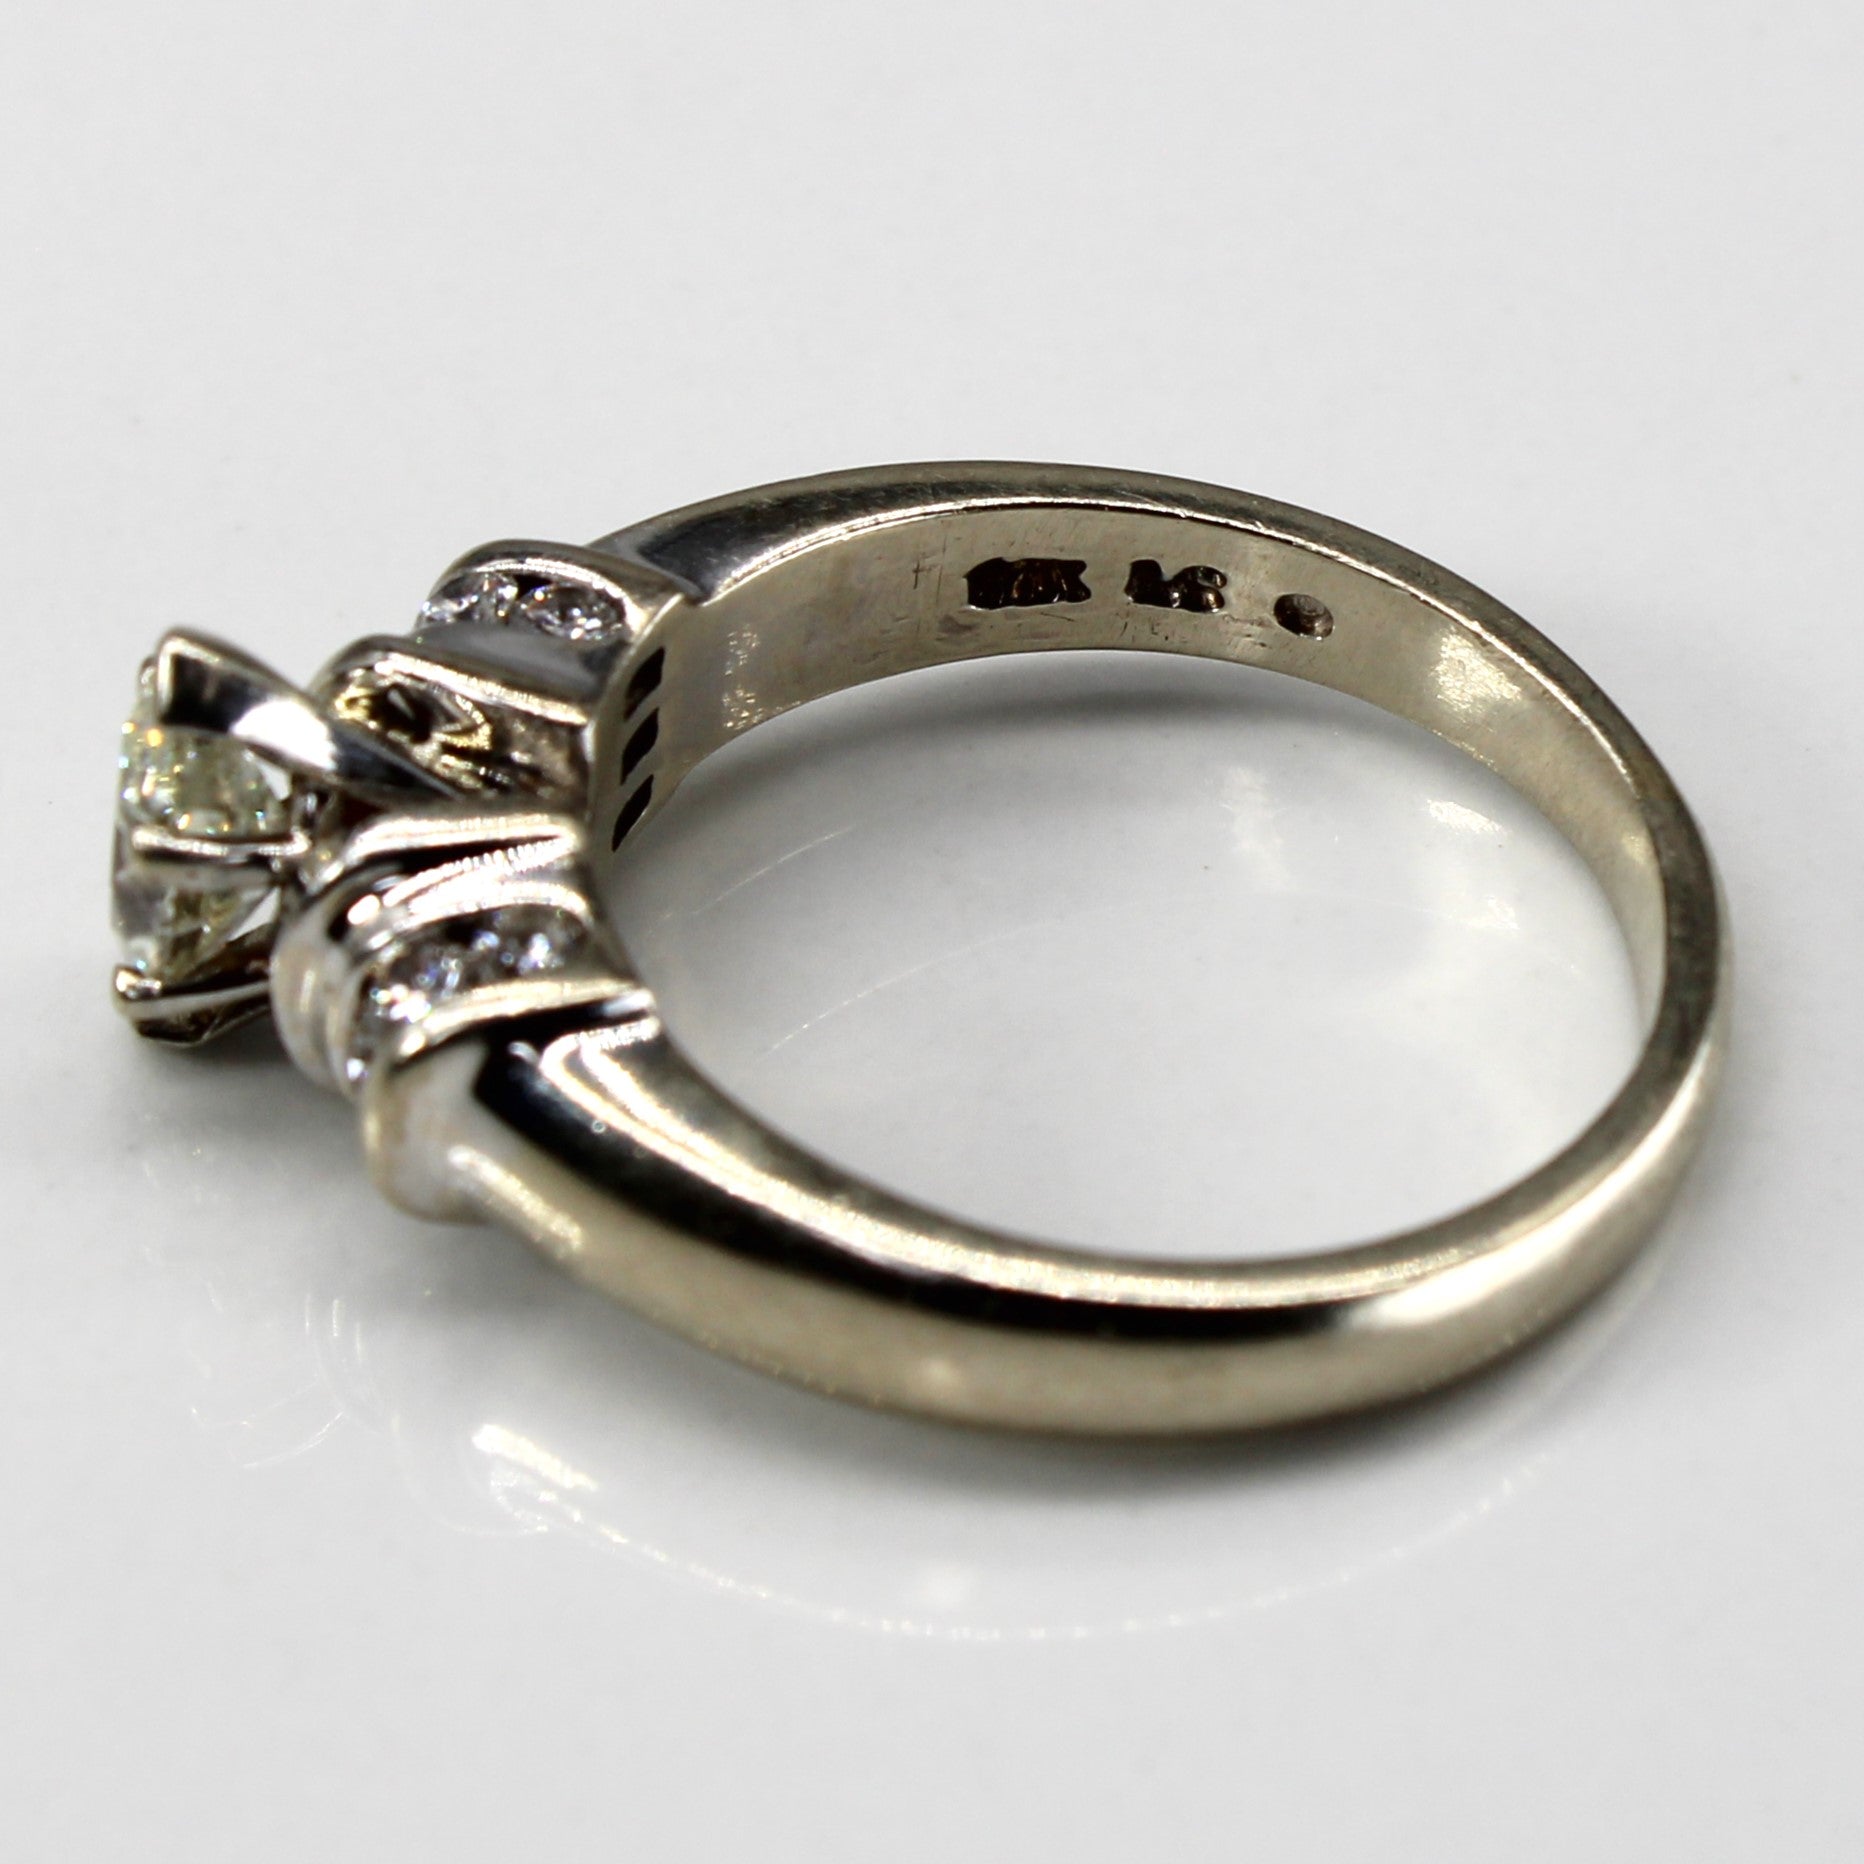 Marquise Diamond Engagement Ring | 1.00ctw | SZ 8.5 |